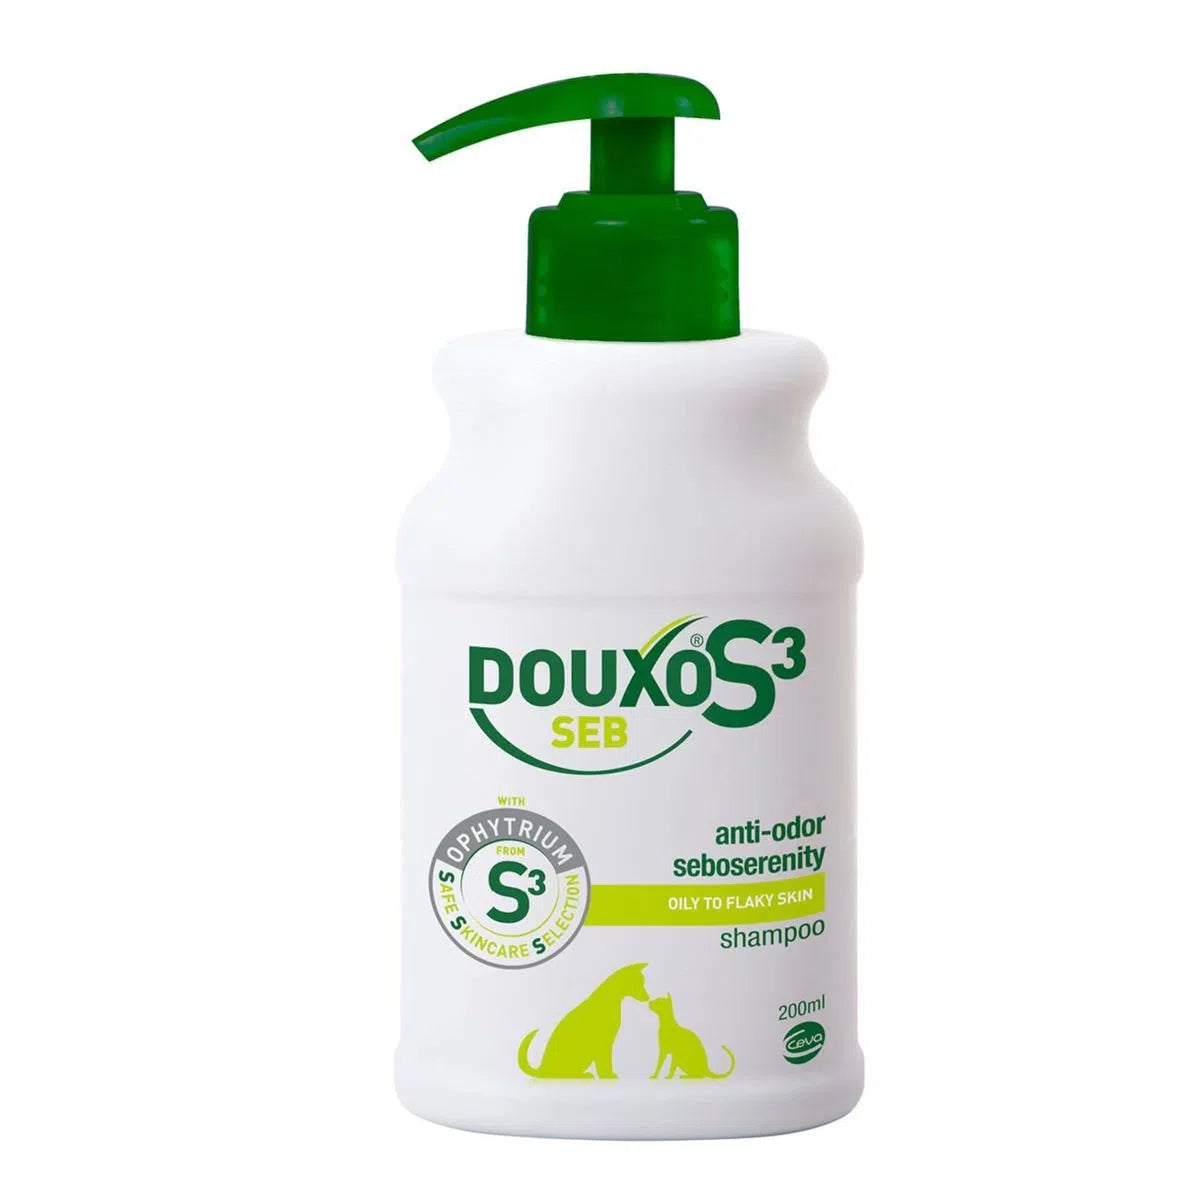 Douxo S3 Seb Shampoo, flacon 200 ml - ALTVET - Farmacie veterinara - Pet Shop - Cosmetica